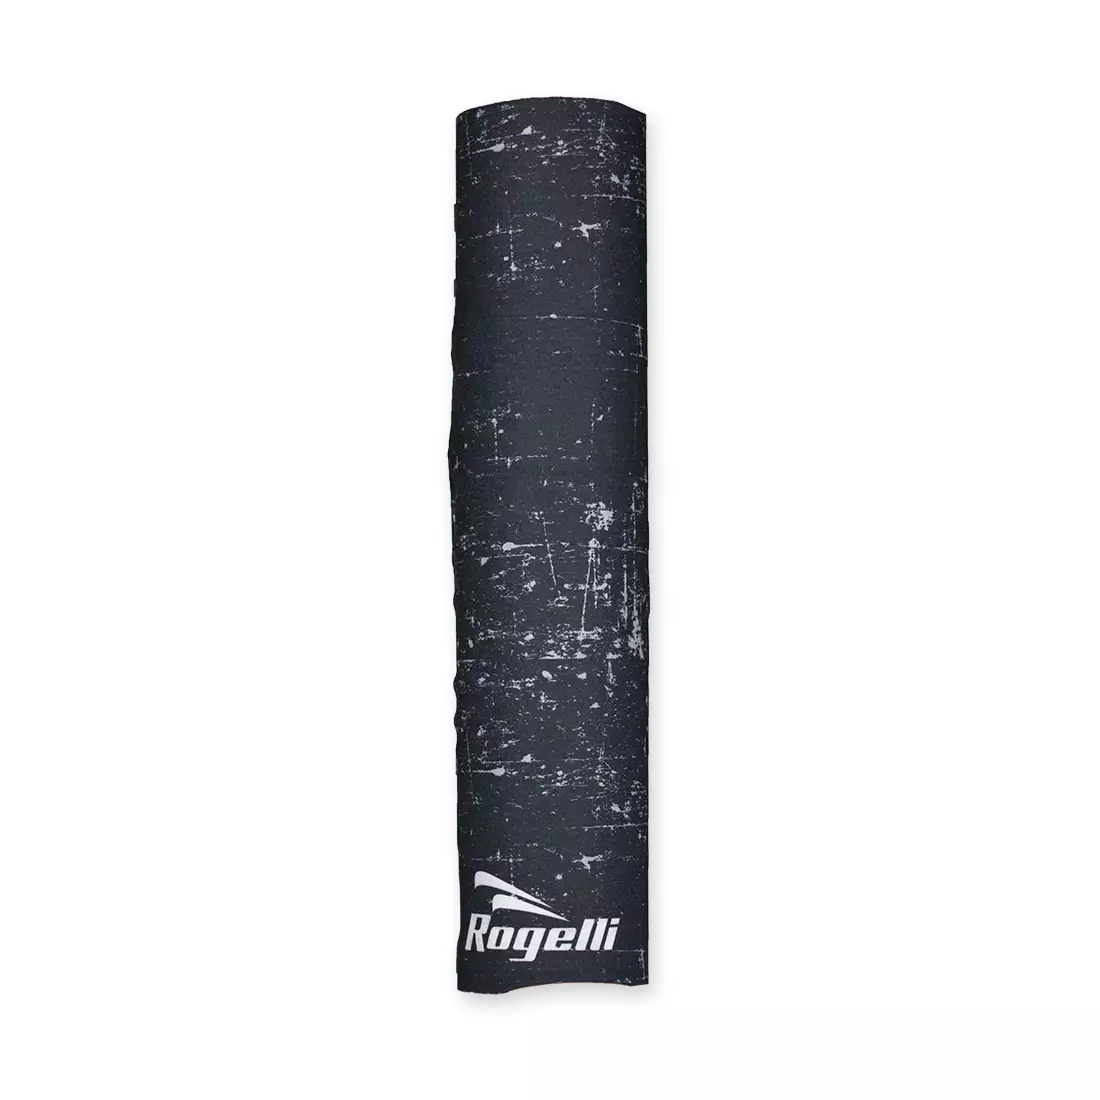 ROGELLI 009.109 SS18 multifunctional scarf, black